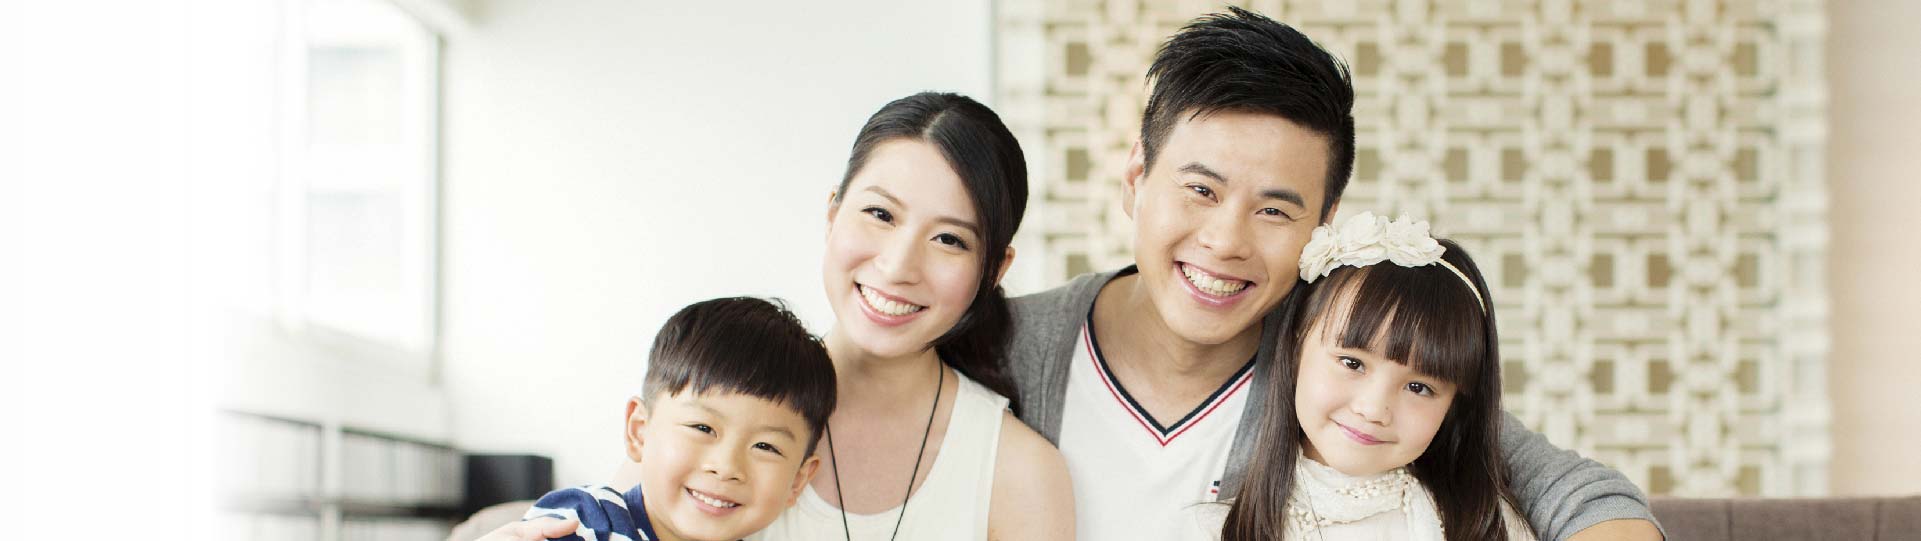 豐隆家居保險/Hong Leong Home Insurance